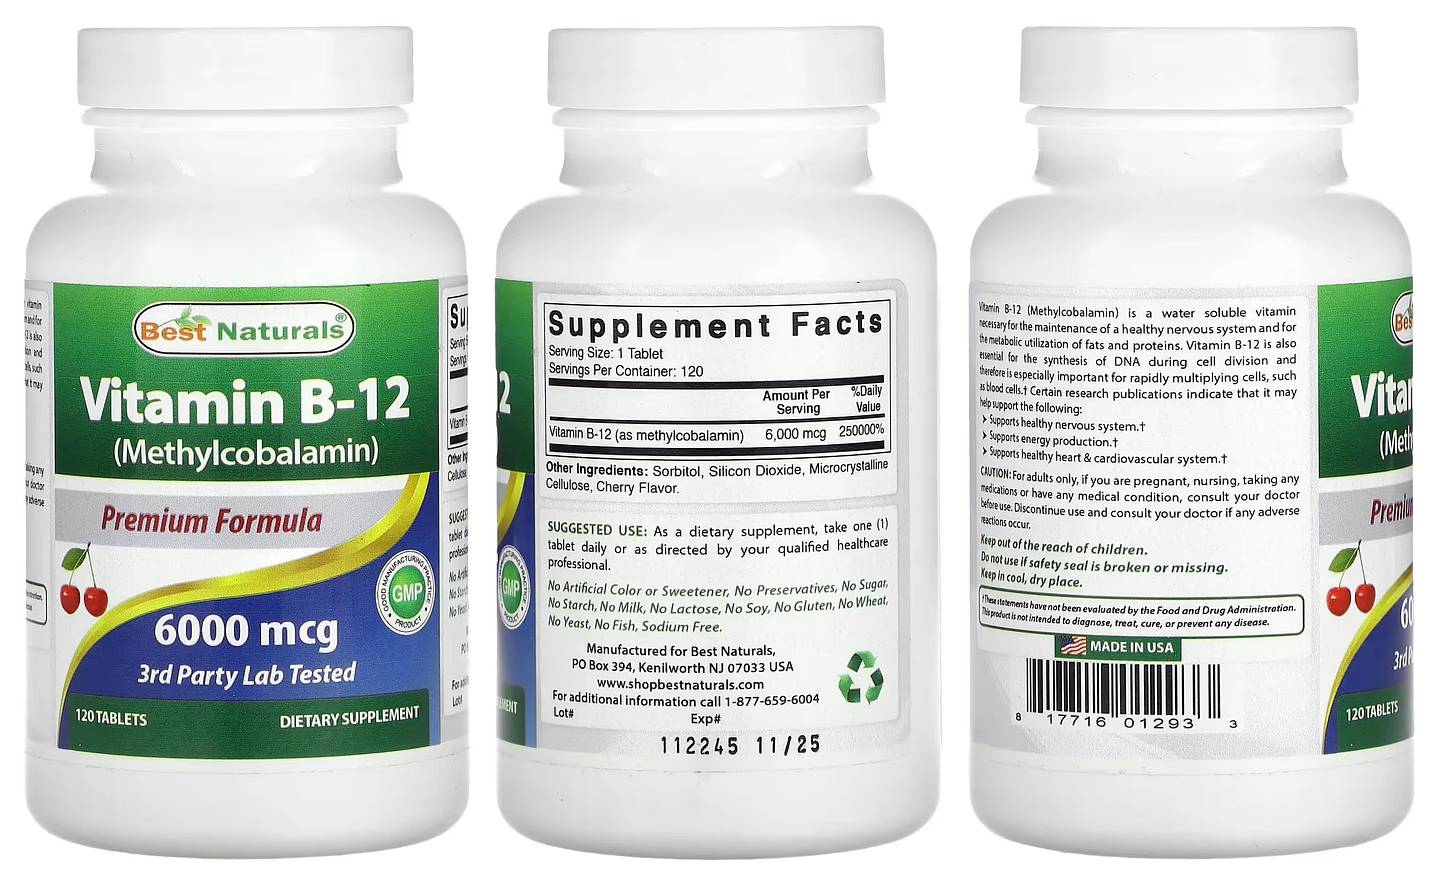 Best Naturals, Vitamin B-12 (Methylcobalamin) packaging